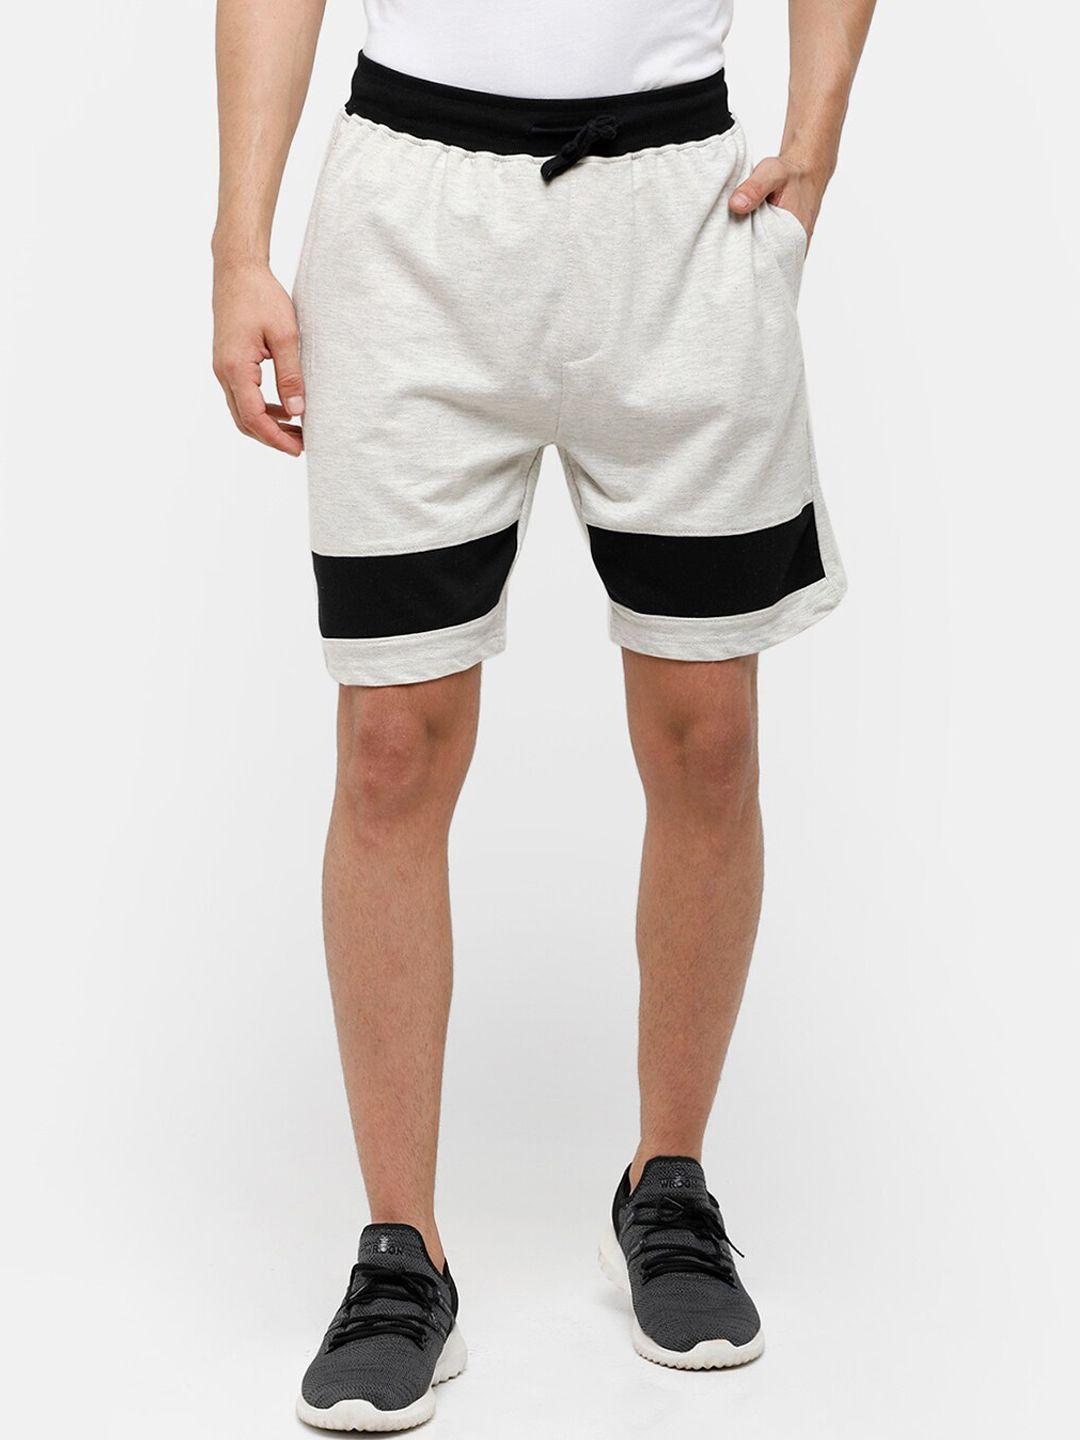 madsto-men-colourblocked-pure-cotton-sports-shorts